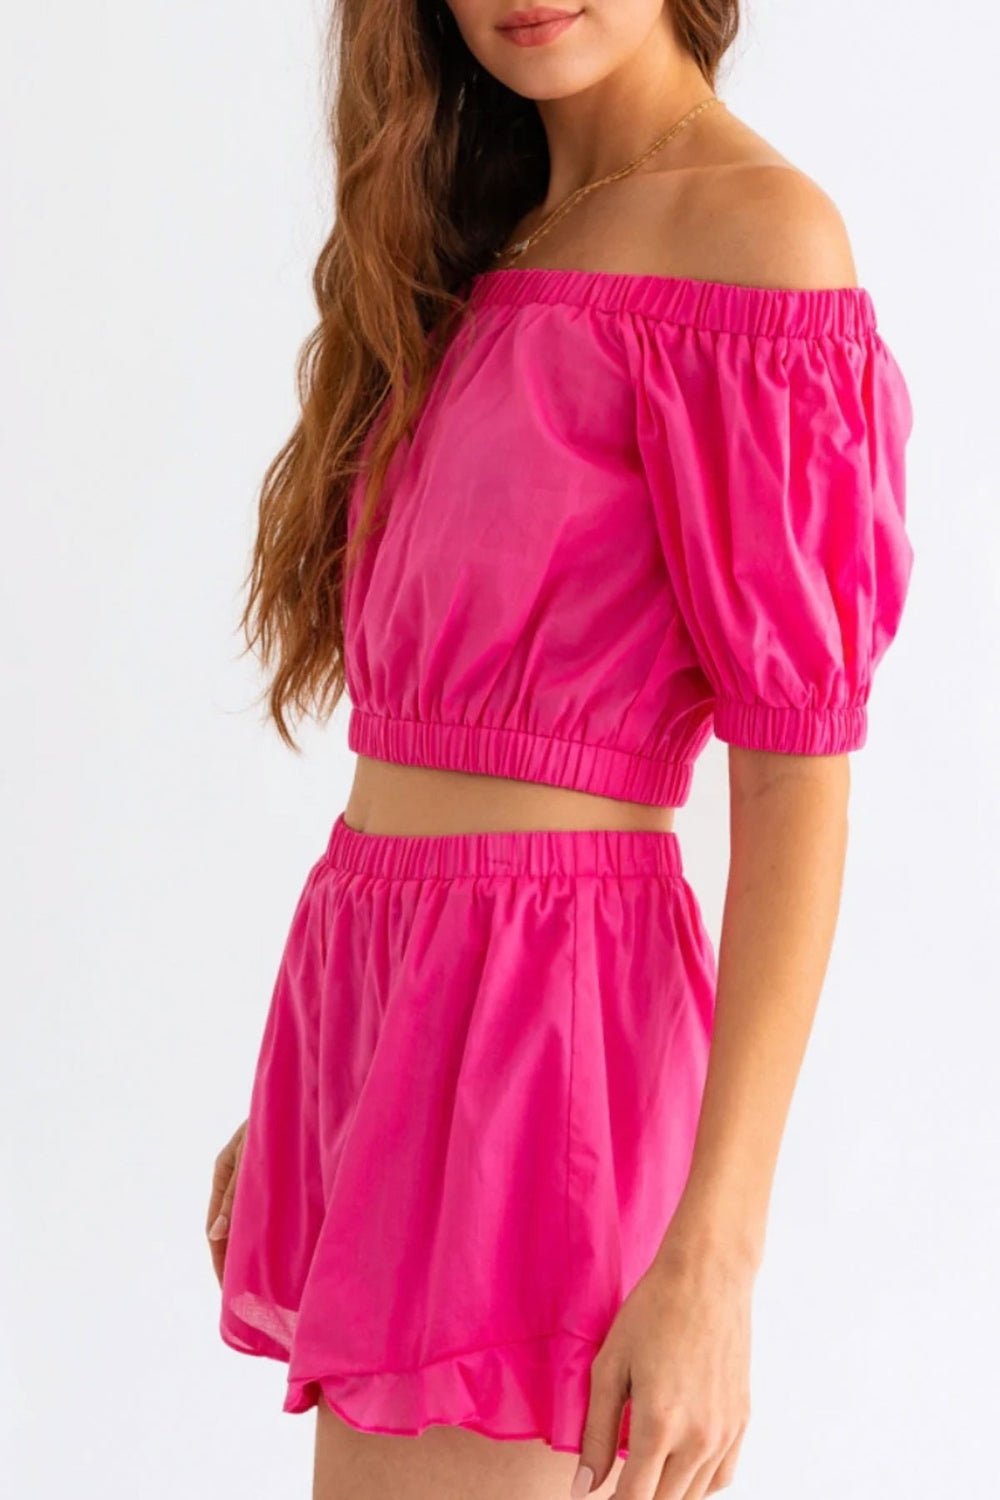 Off Shoulder Crop Top and Ruffled Shorts Set in PinkShorts SetTASHA